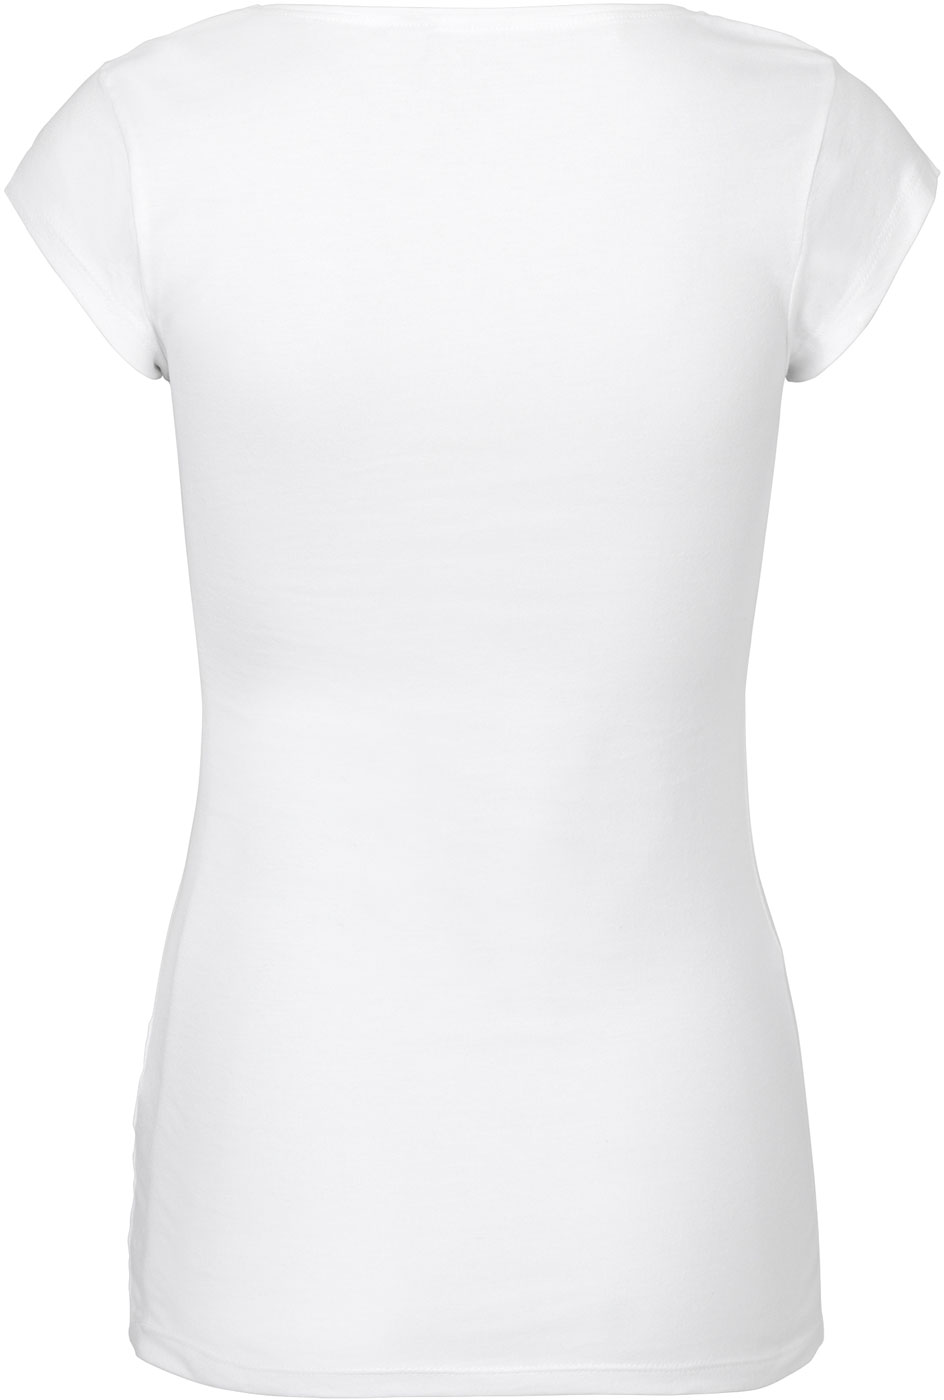 T-Shirt Round Organic Cotton Neck -